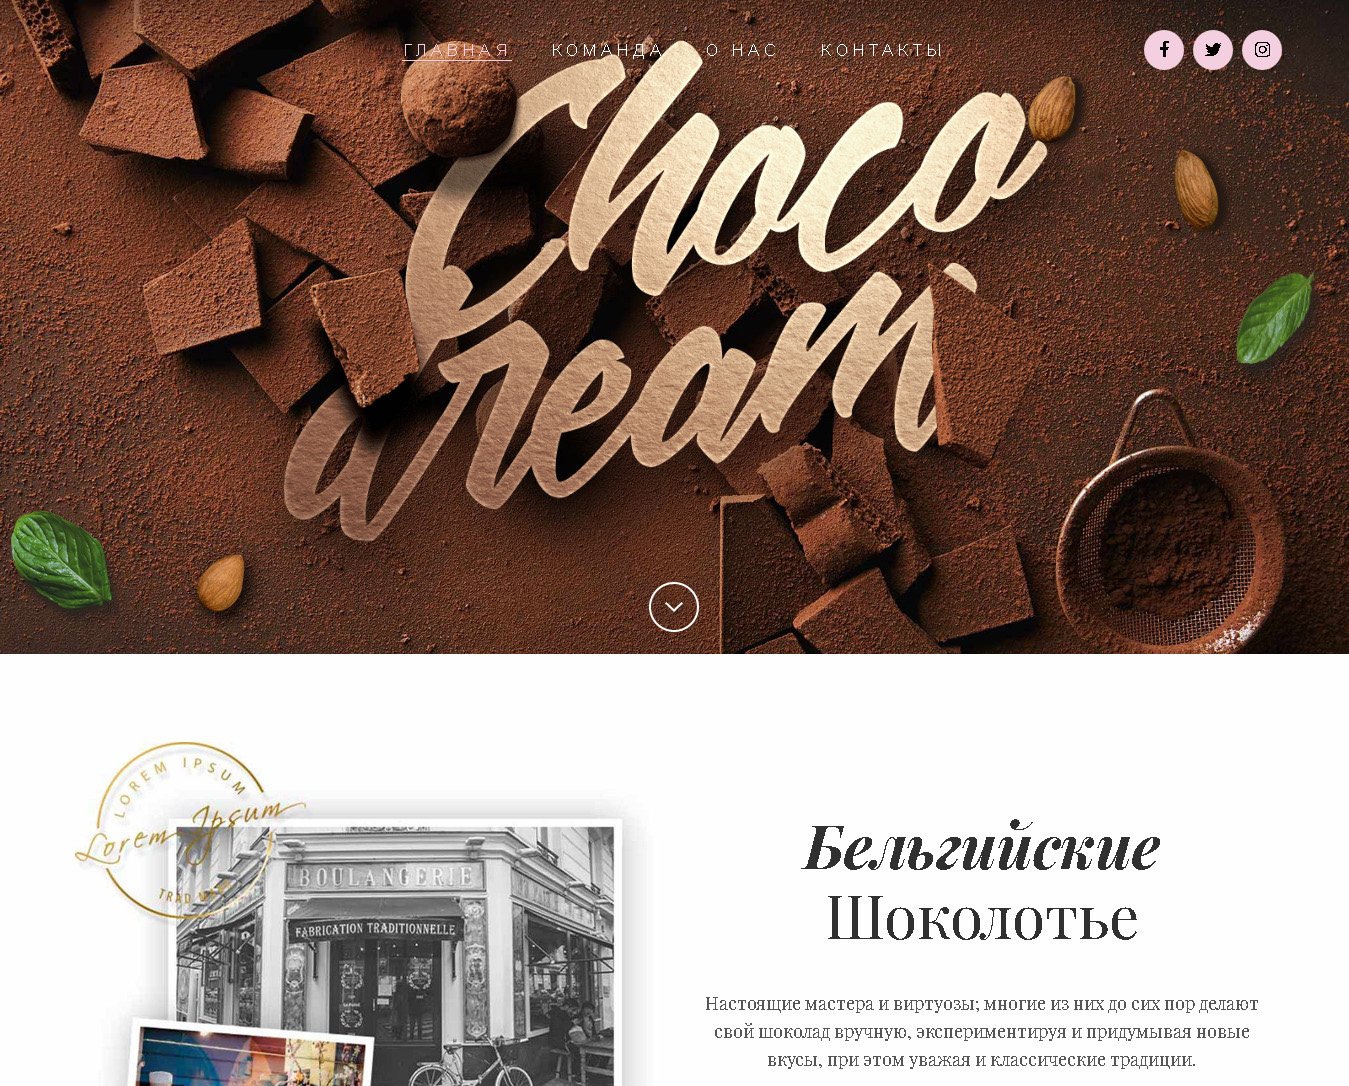 Каталог магазина шоколада. Магазин шоколада. Шоколад названия. Придумать название шоколадки. Реклама магазина шоколада.